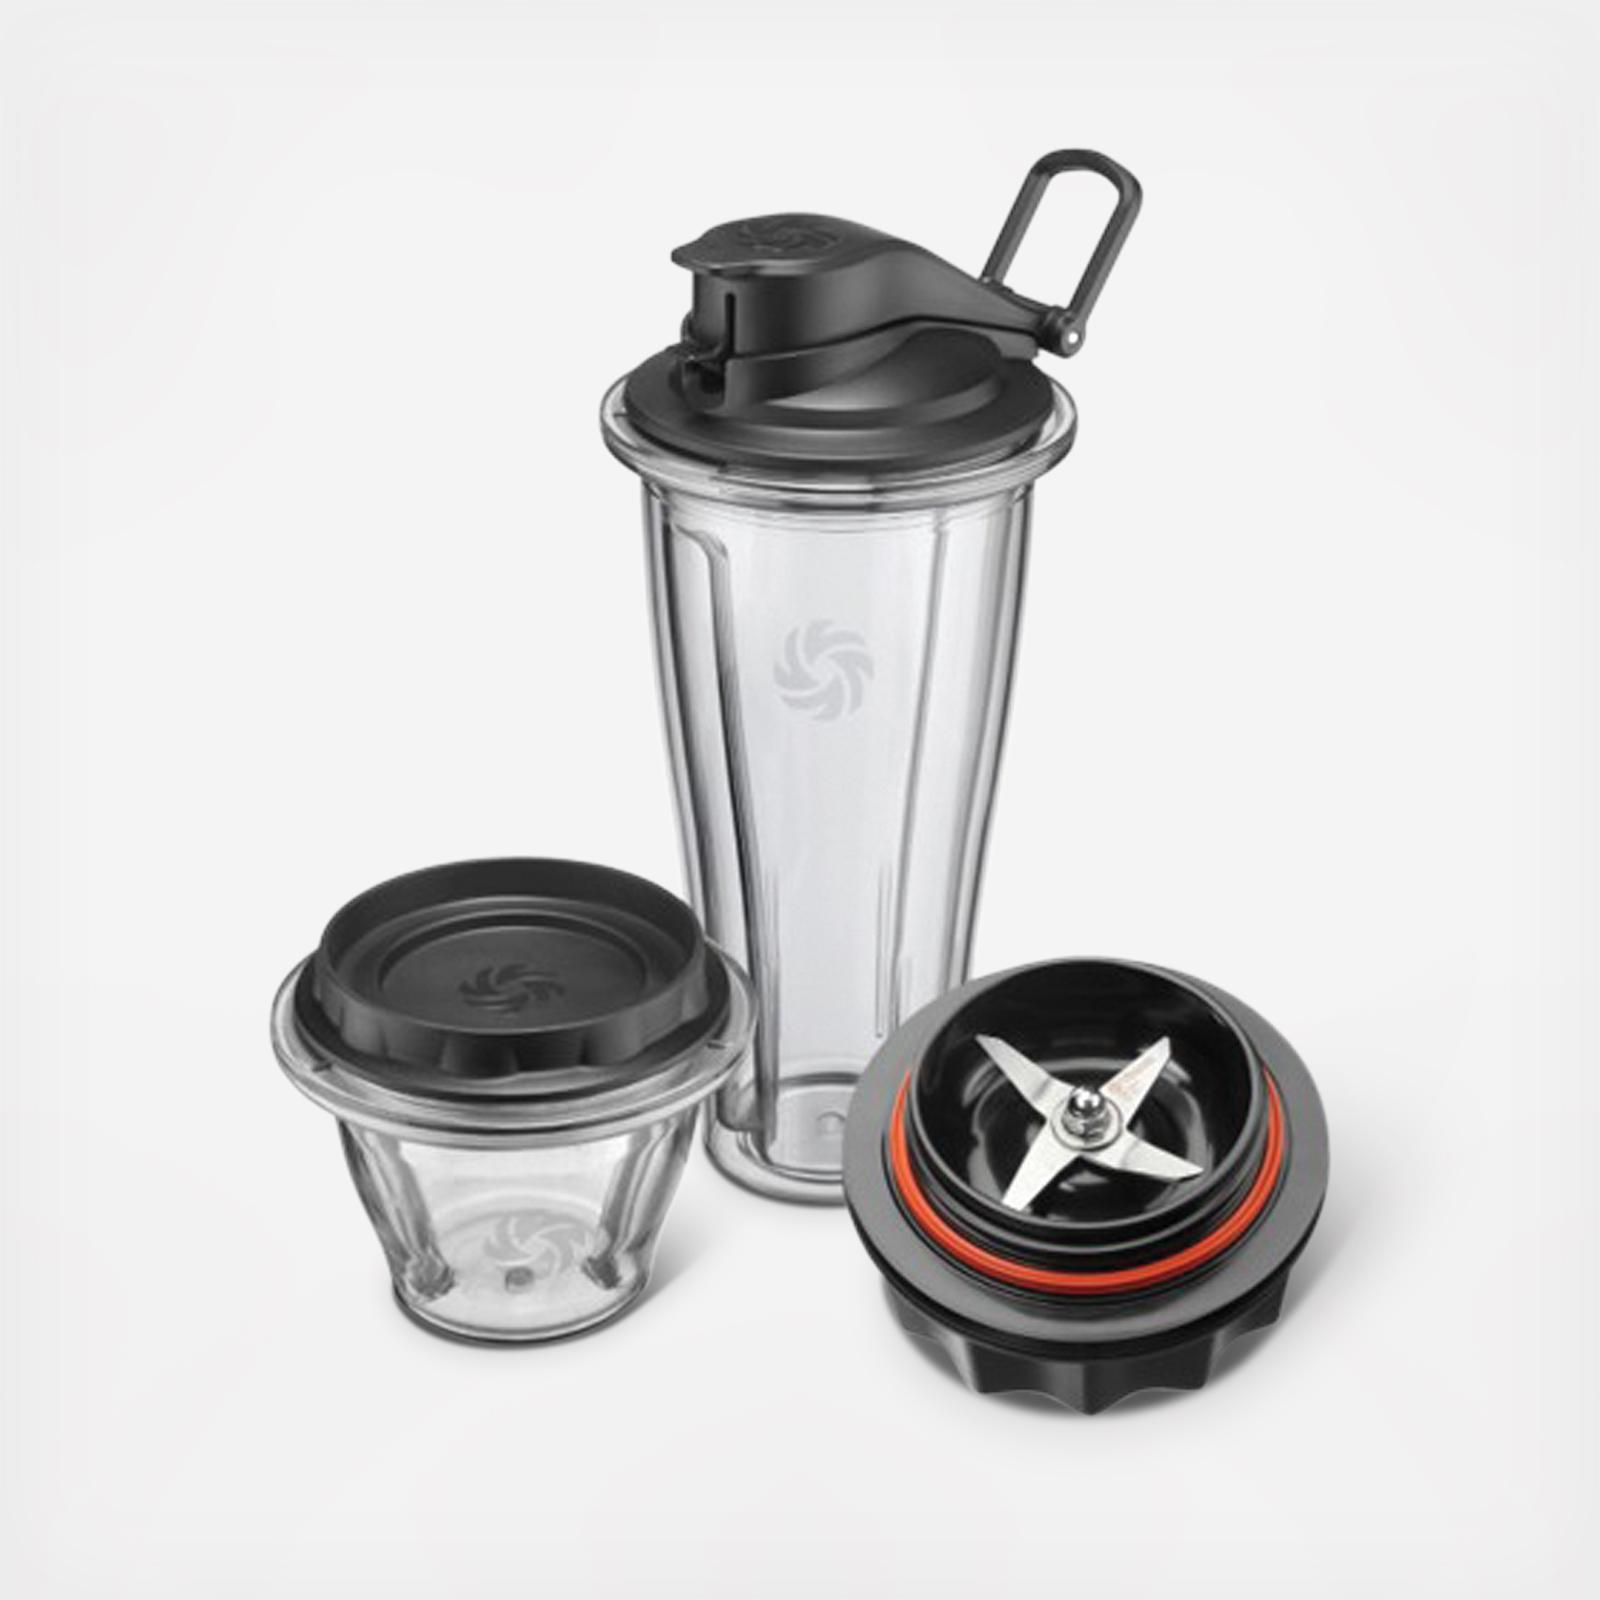 Vitamix Ascent Blending Cup and Bowl Starter Kit